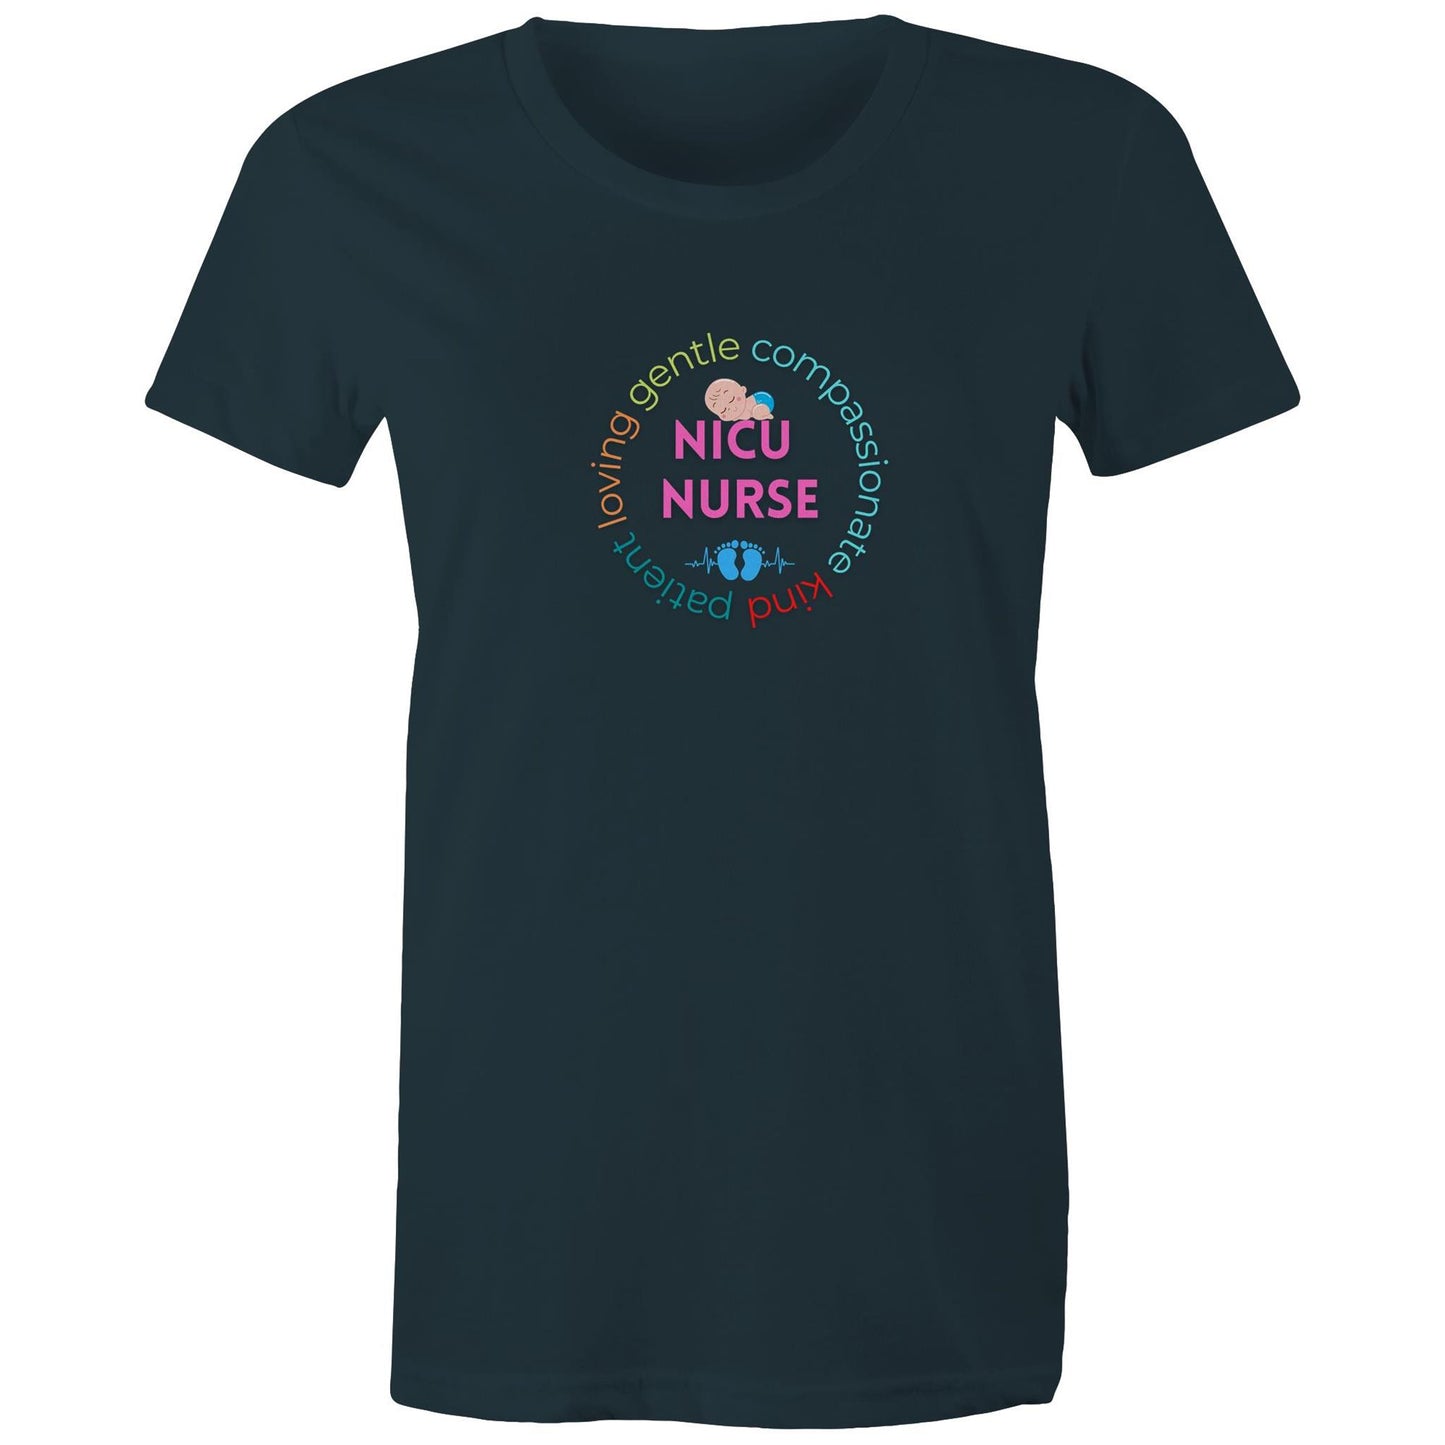 NICU Nurse Women's Maple Tee